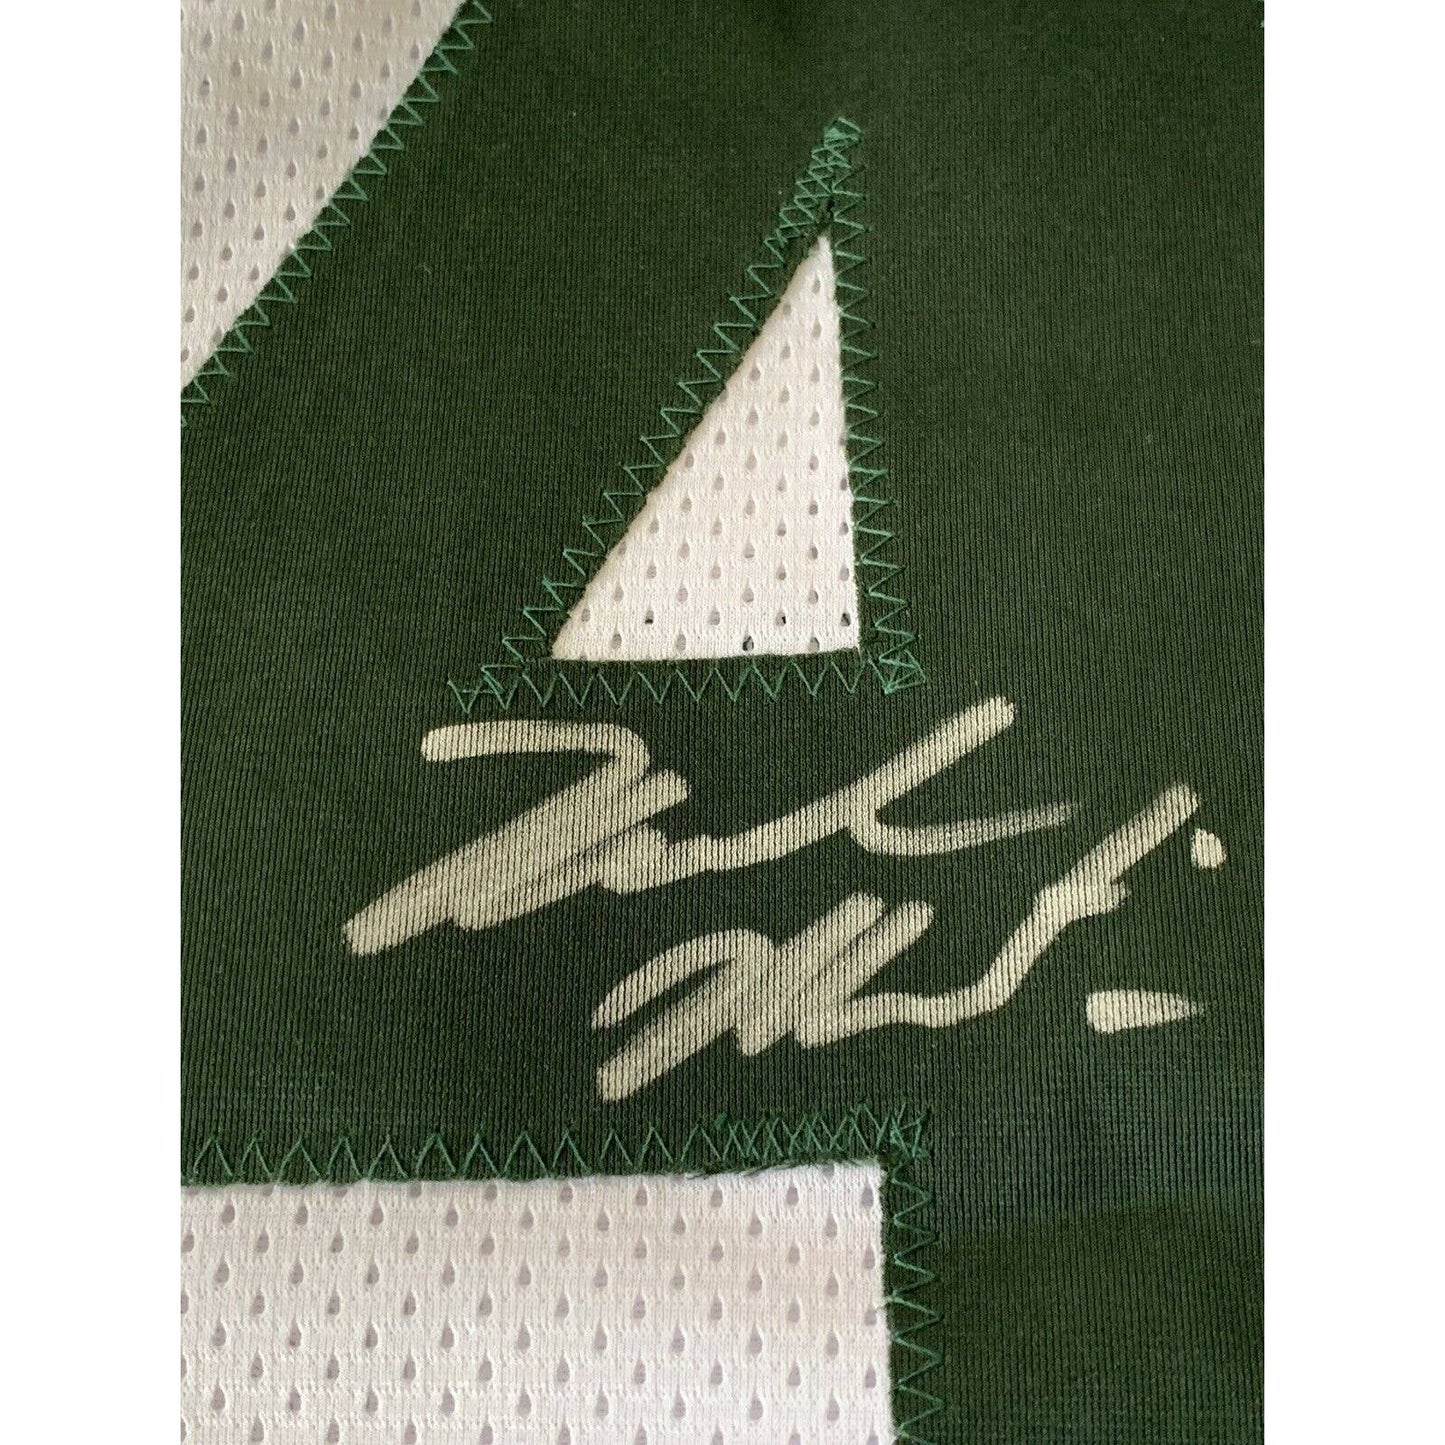 Kamal Martin Autographed/Signed Jersey Beckett Sticker Green Bay Packers - TreasuresEvolved